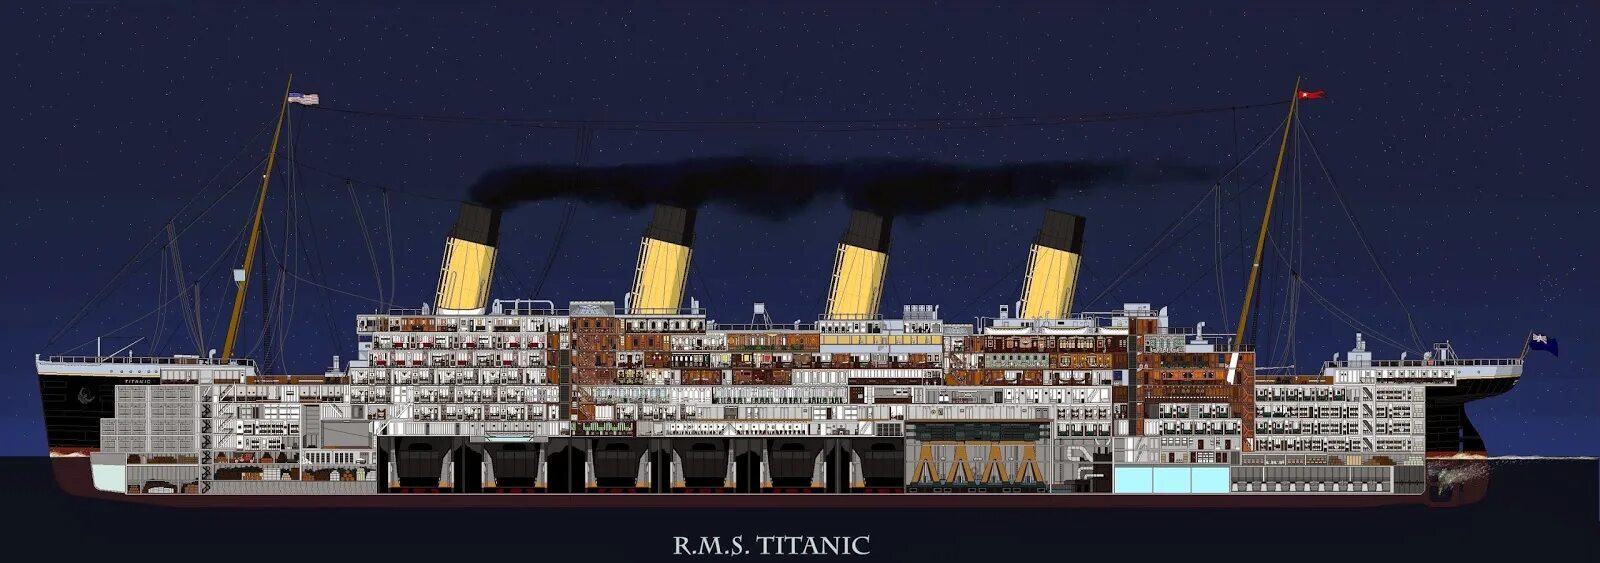 RMS Titanic. Лайнер RMS Titanic. Титаник 2 корабль. Титаник 2 и Британик 2 и Олимпик 2. Сисель кюкербо титаник